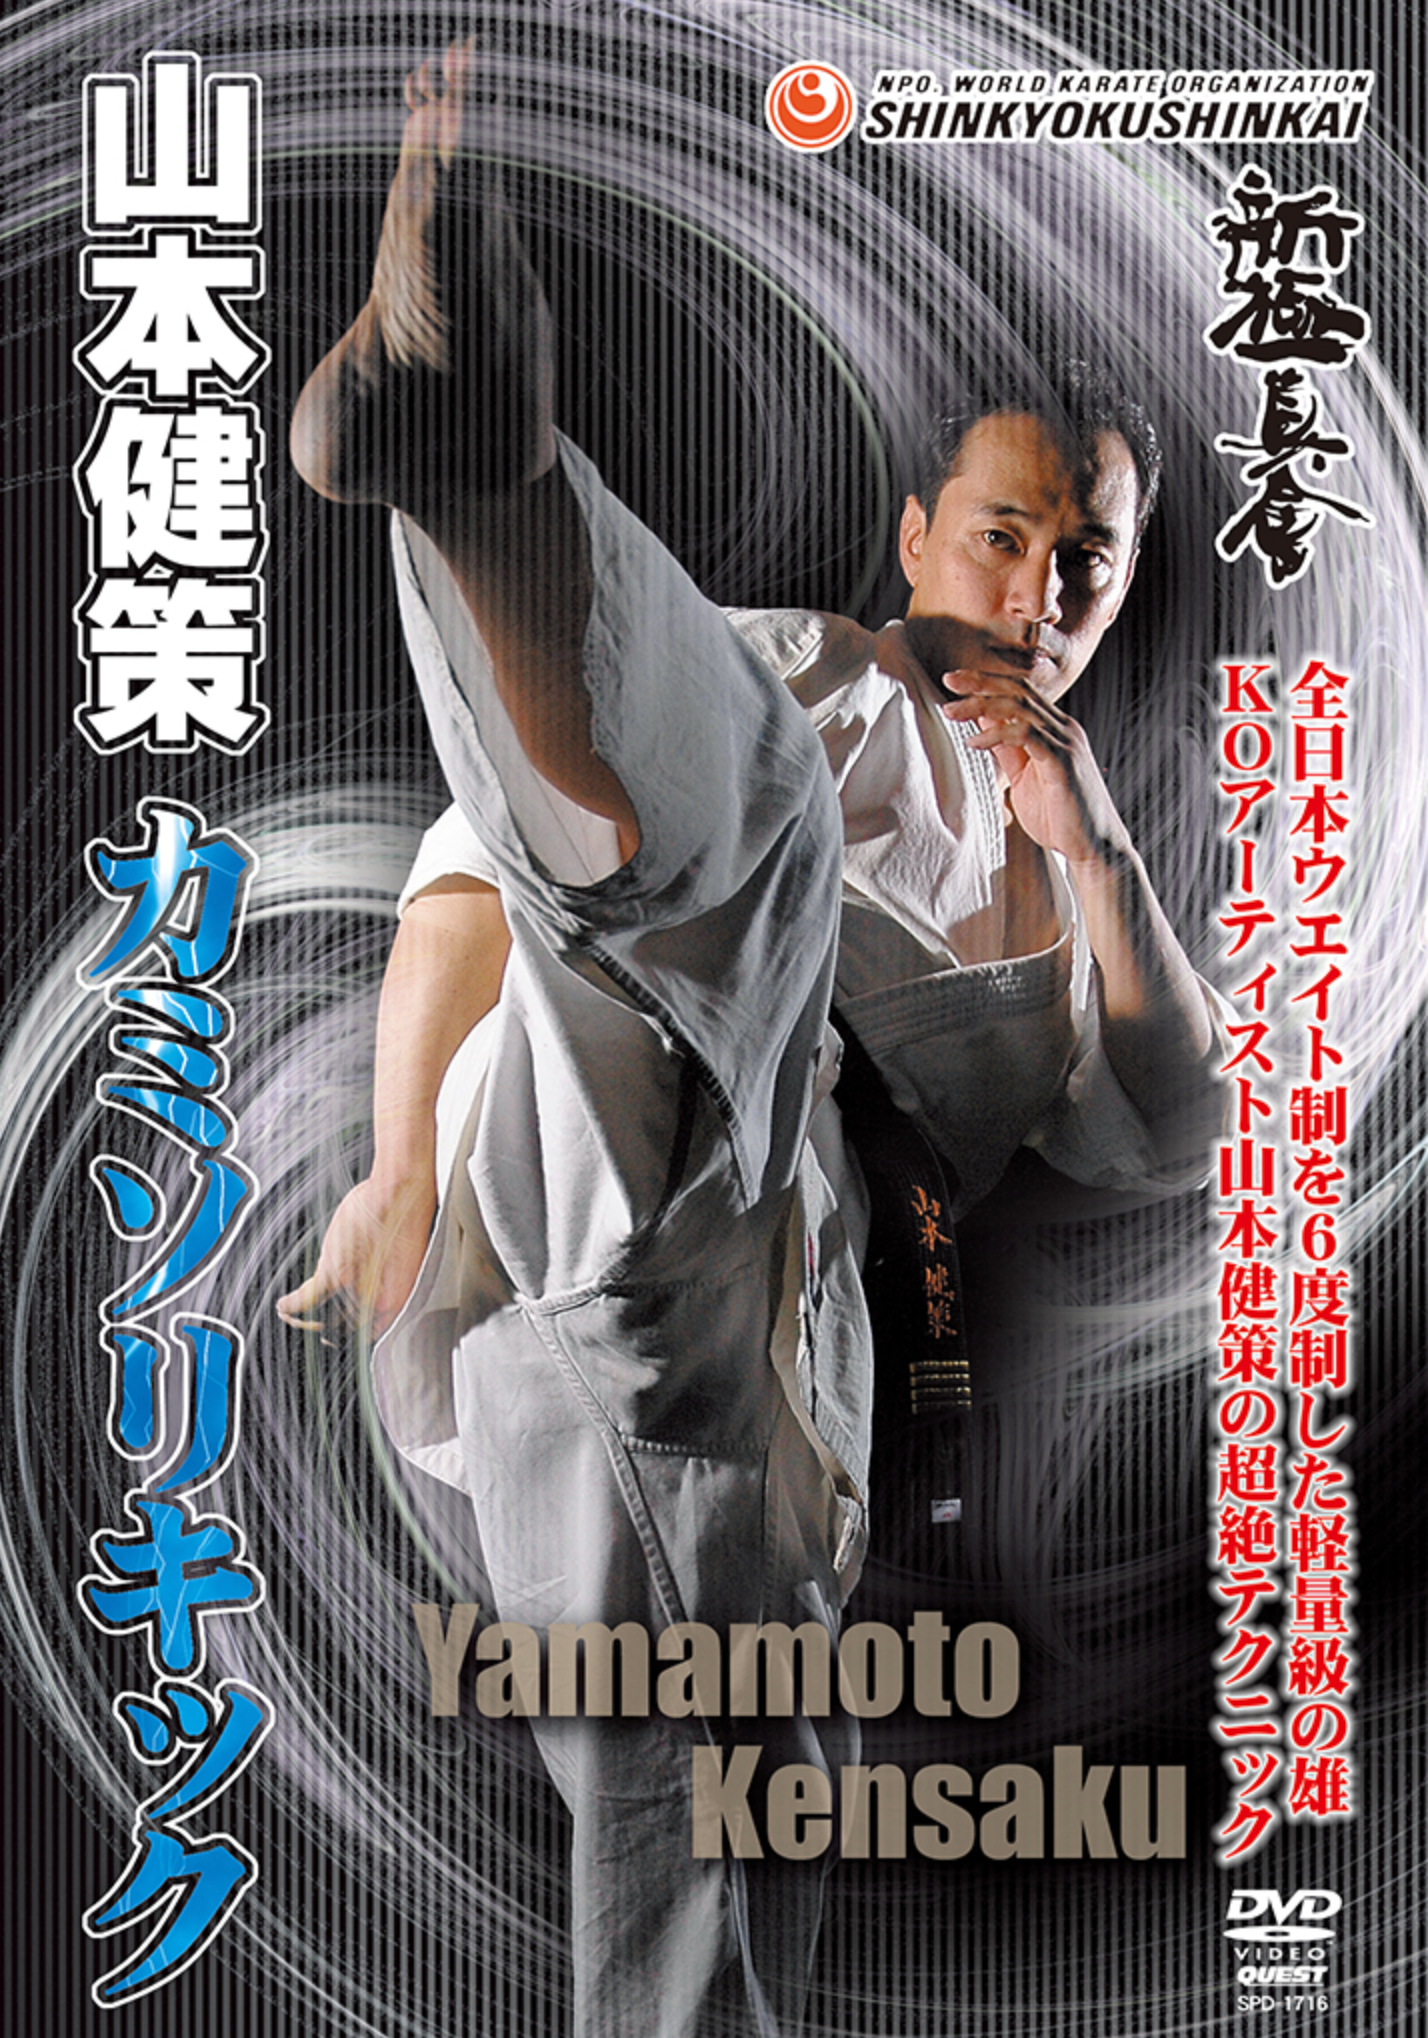 Razor Kick DVD with Kensaku Yamamoto - Budovideos Inc